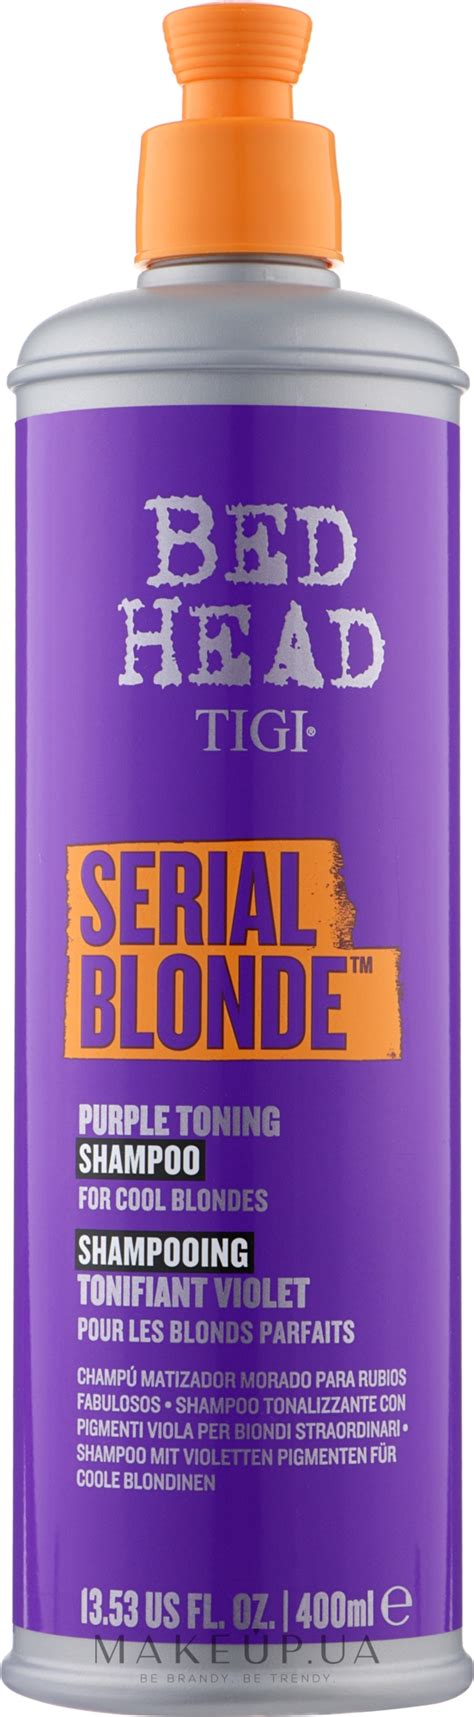 Tigi Bed Head Serial Blonde Purple Toning Shampoo